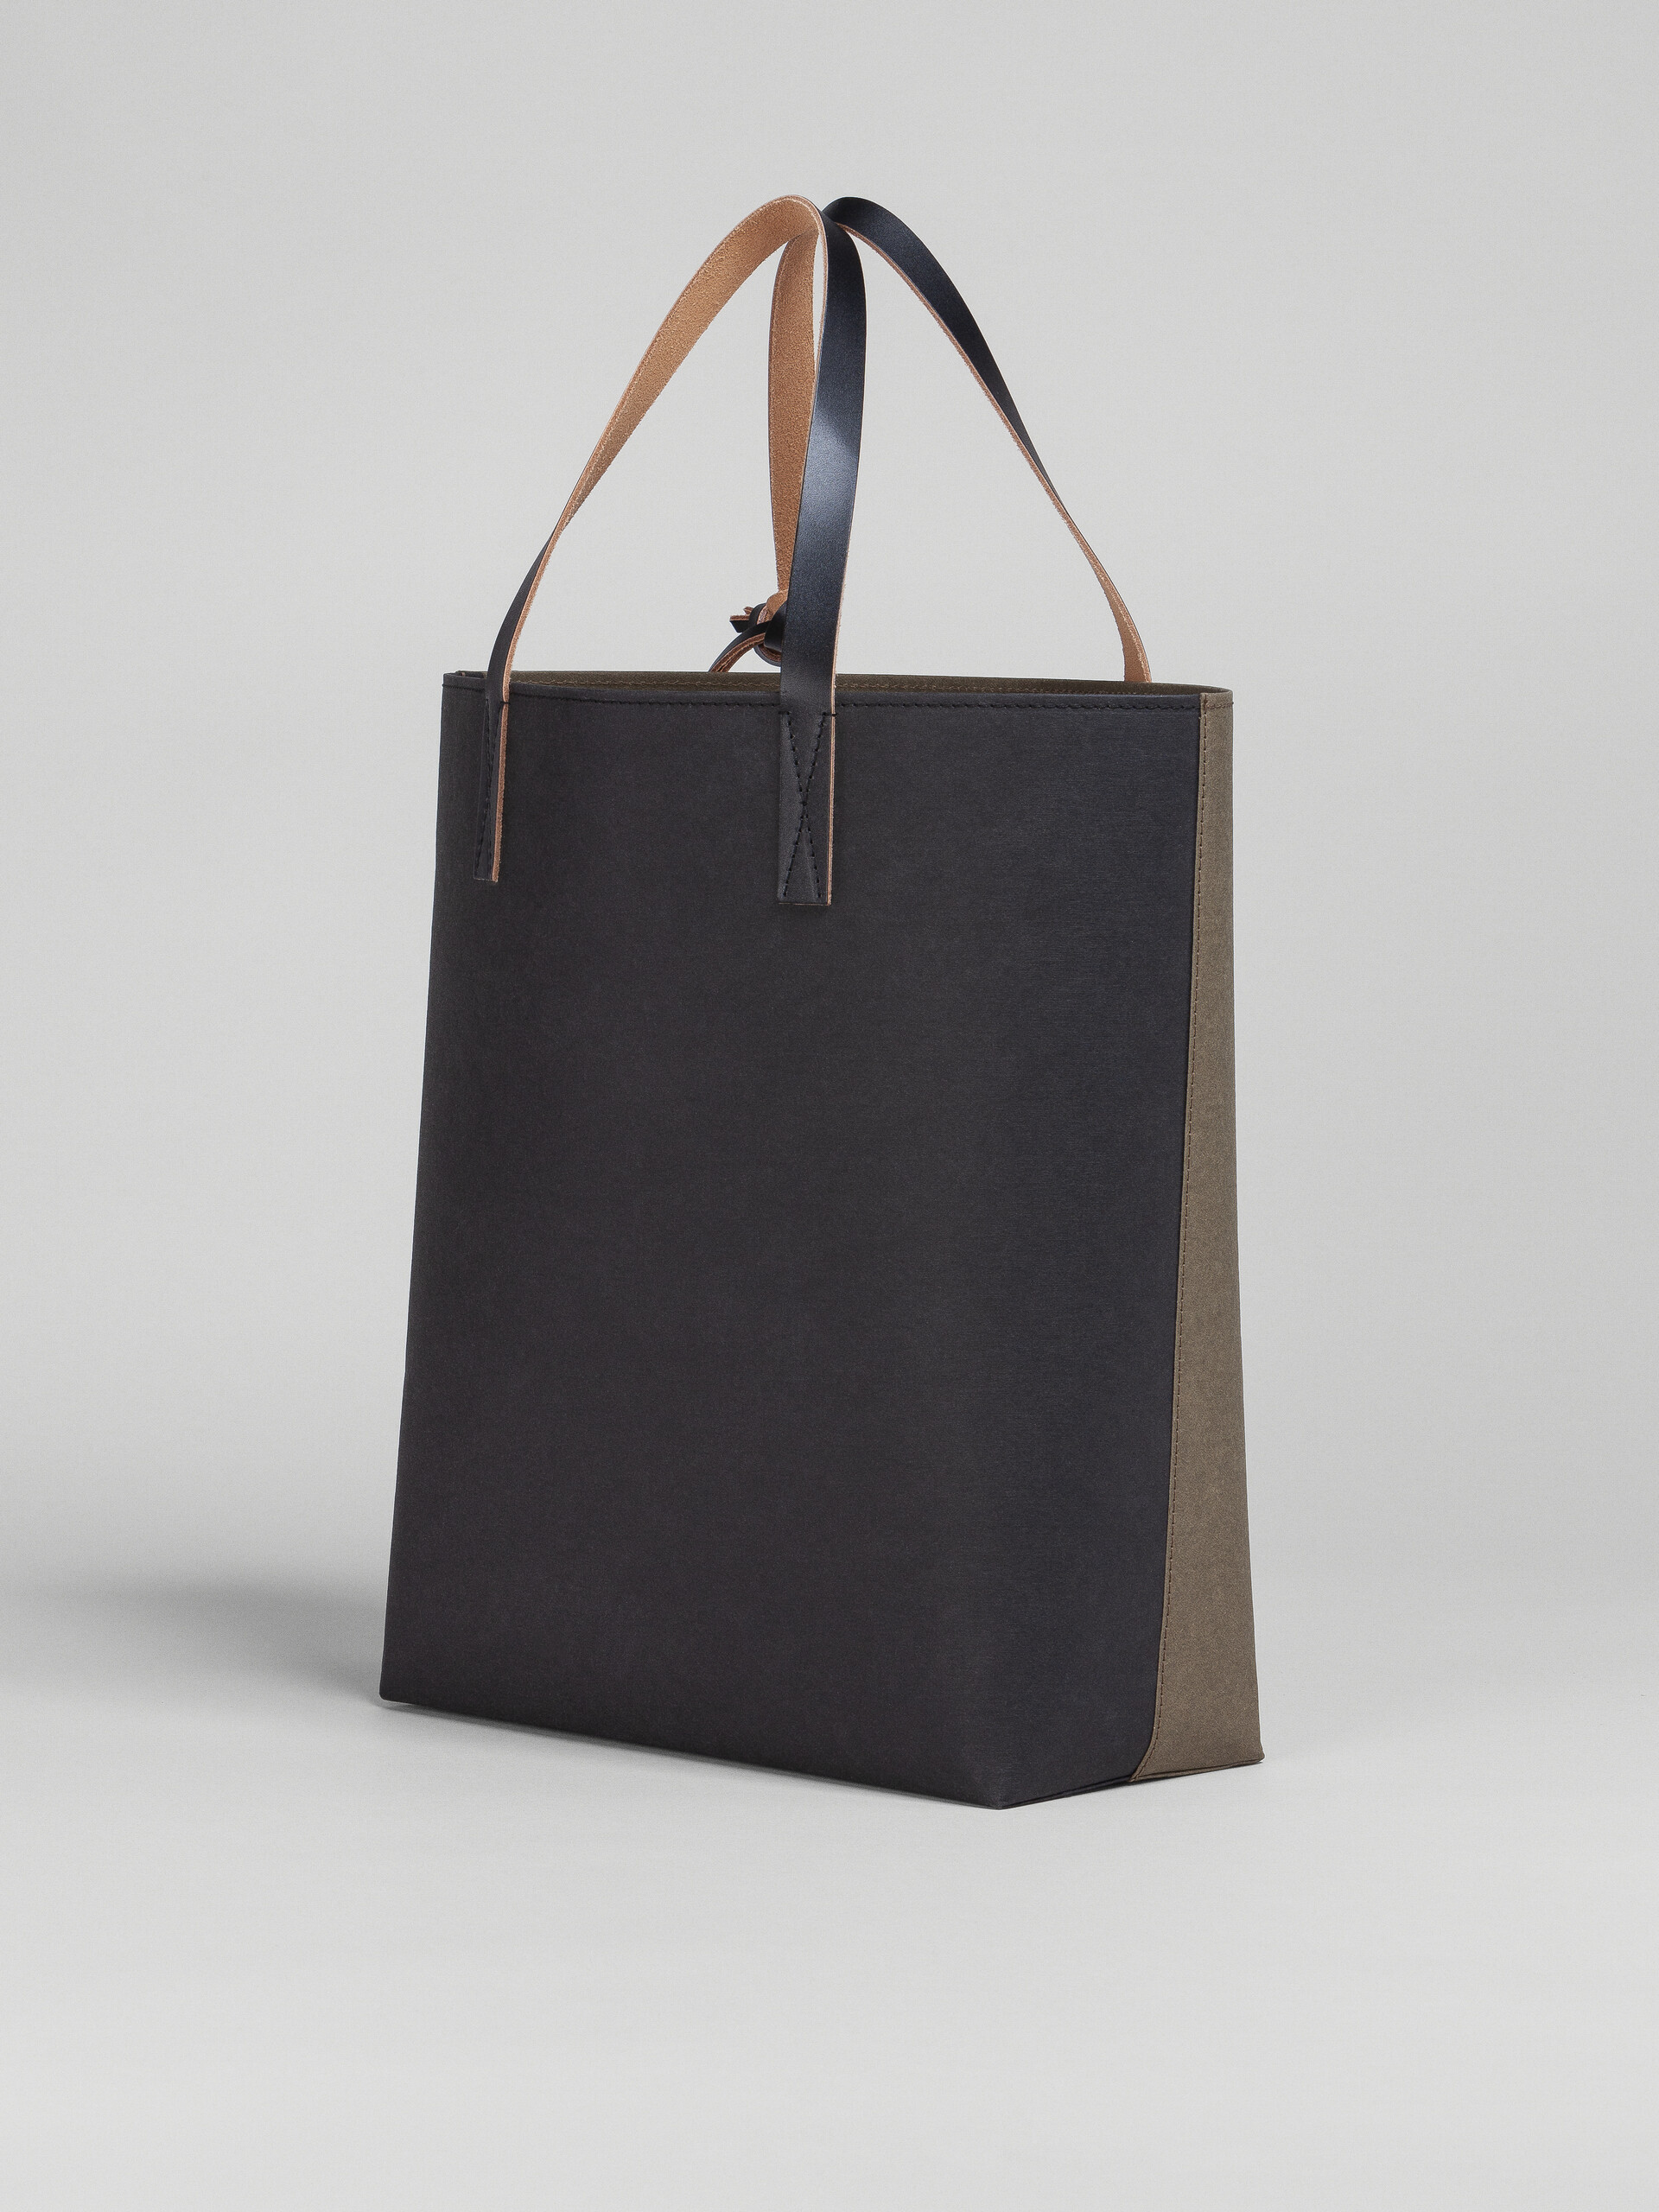 Green TRIBECA shopping bag with Marni logo - Shopping Bags - Image 3